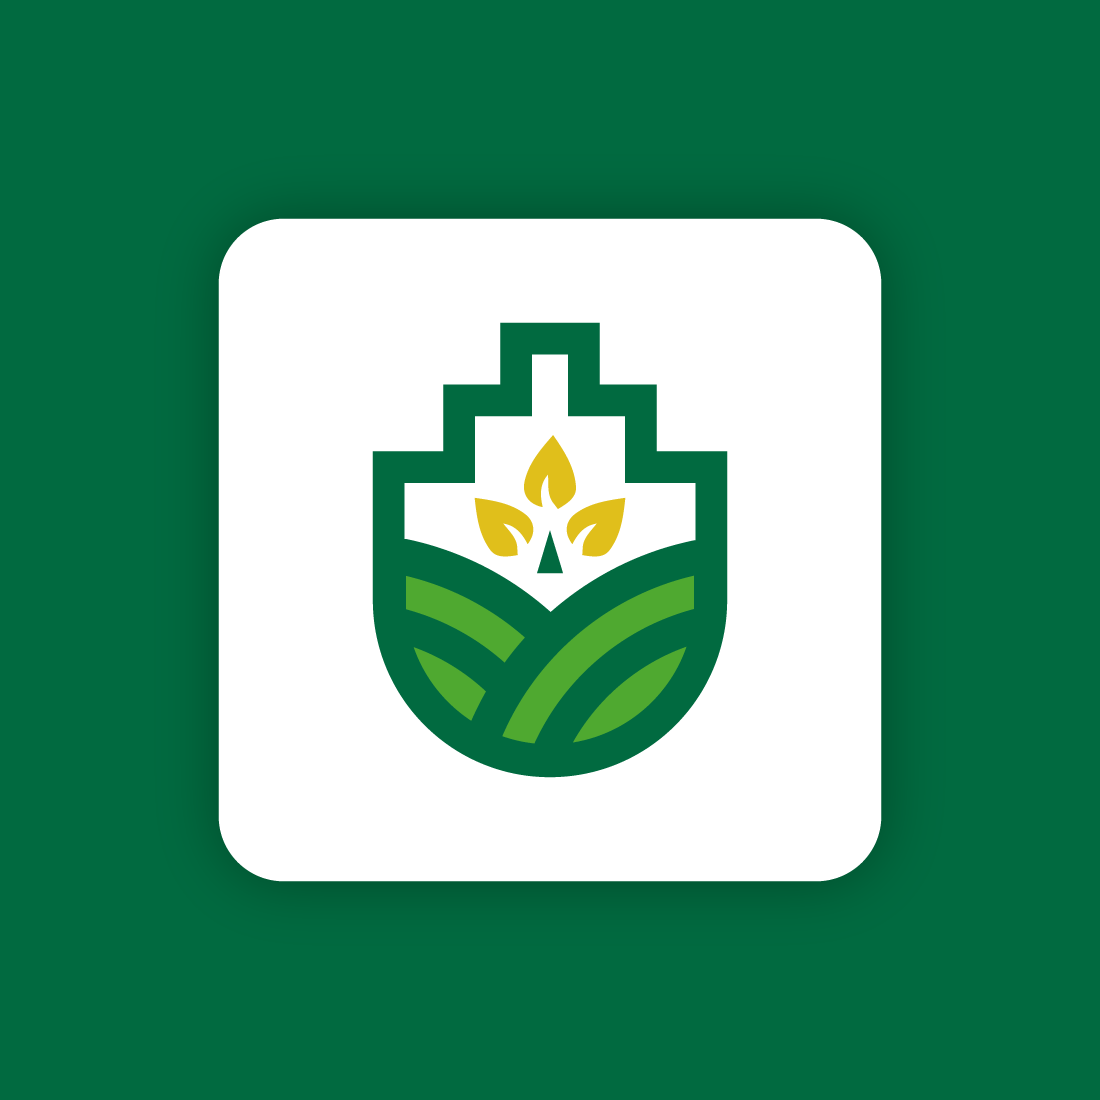 Agriculture | farmer | Wheat | Garden | Nursery - logo design template preview image.